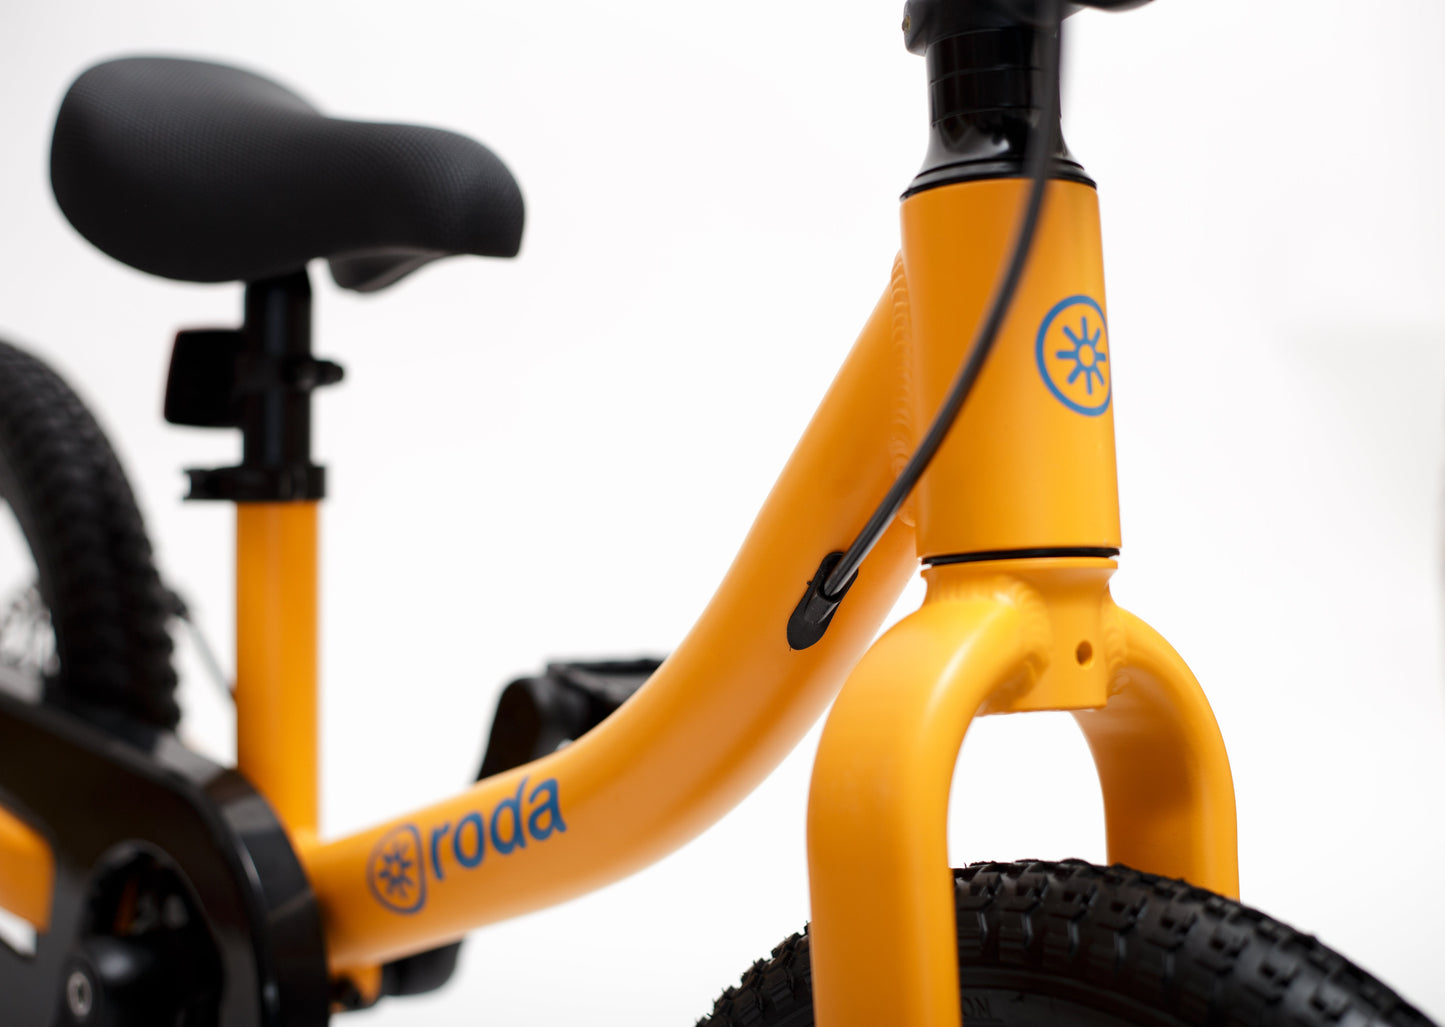 Bicicleta Roda Pro Series Aro 14 + Kit de pedales